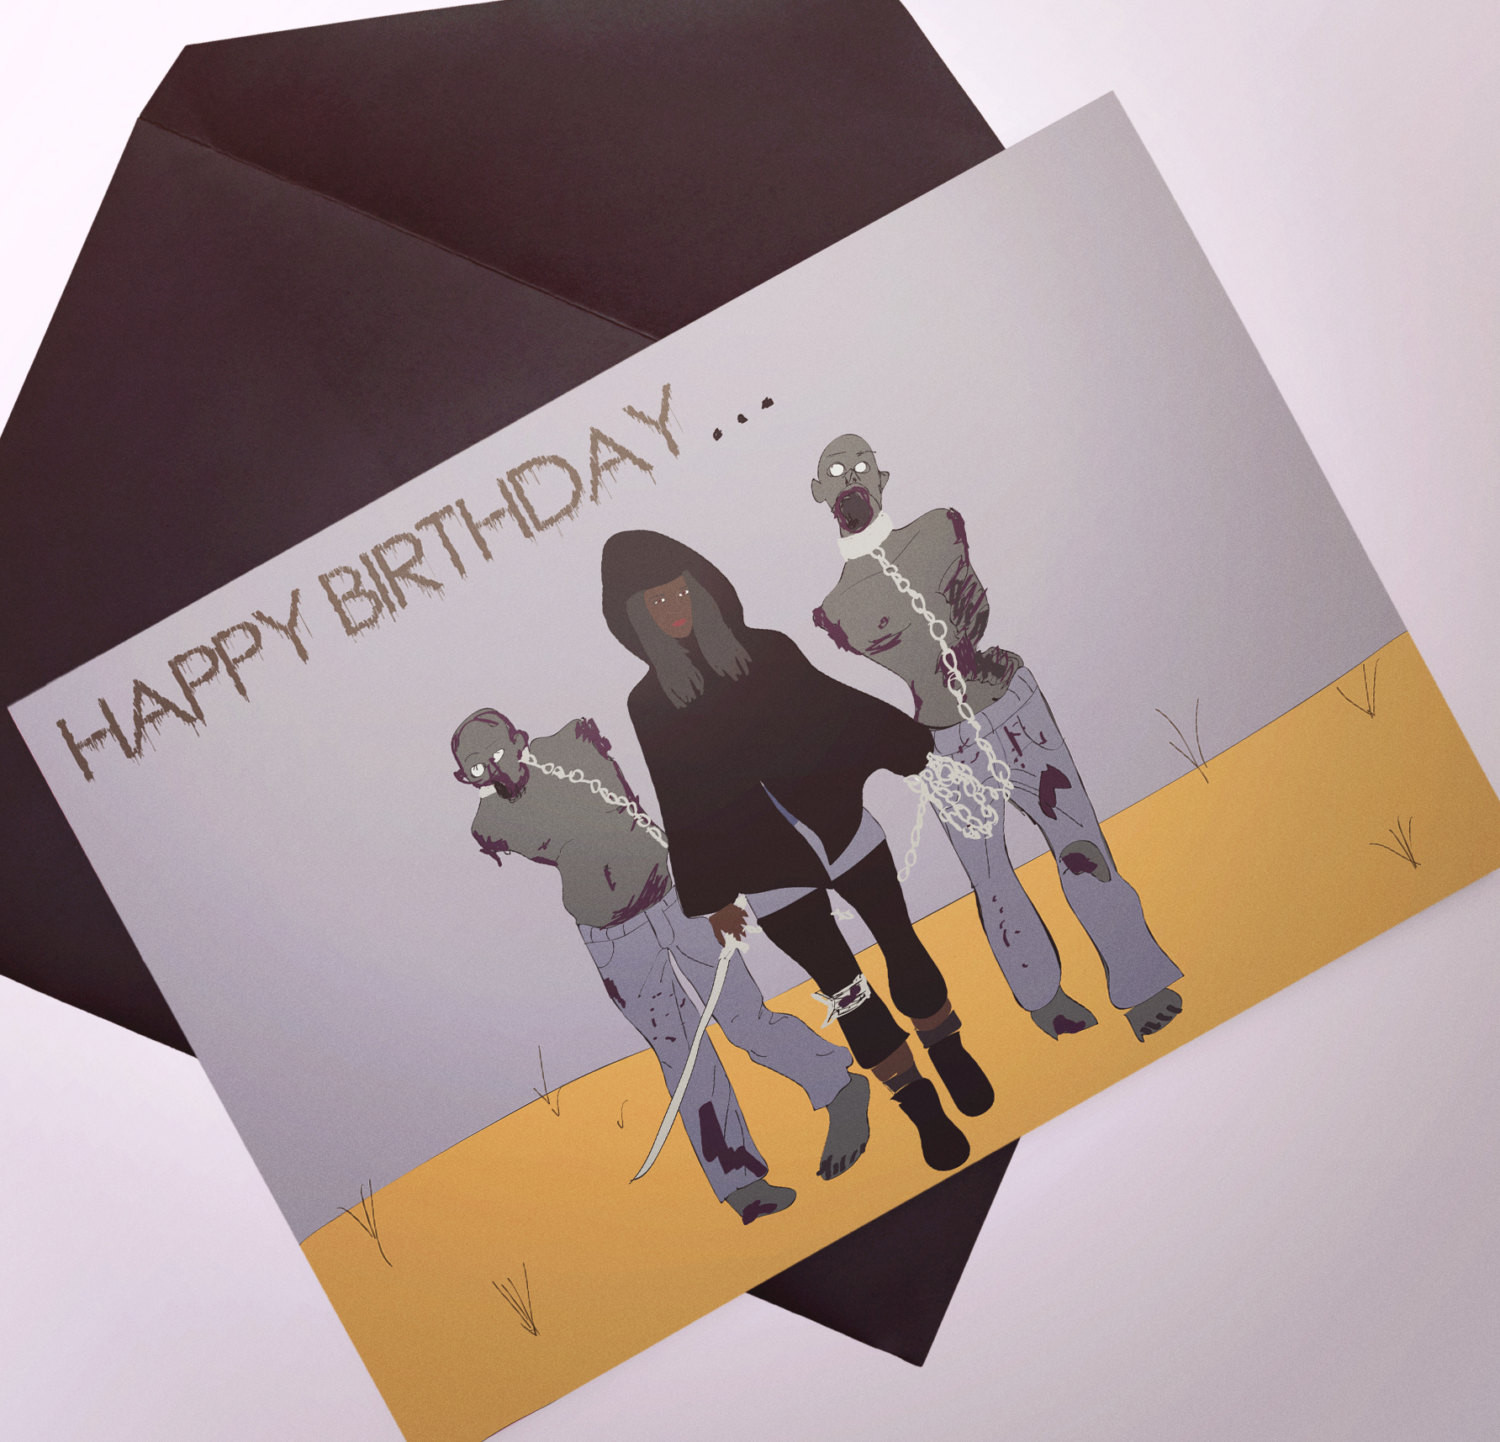 Best ideas about Walking Dead Birthday Card
. Save or Pin The Walking Dead Zombie Birthday Card happy by PopPastiche Now.